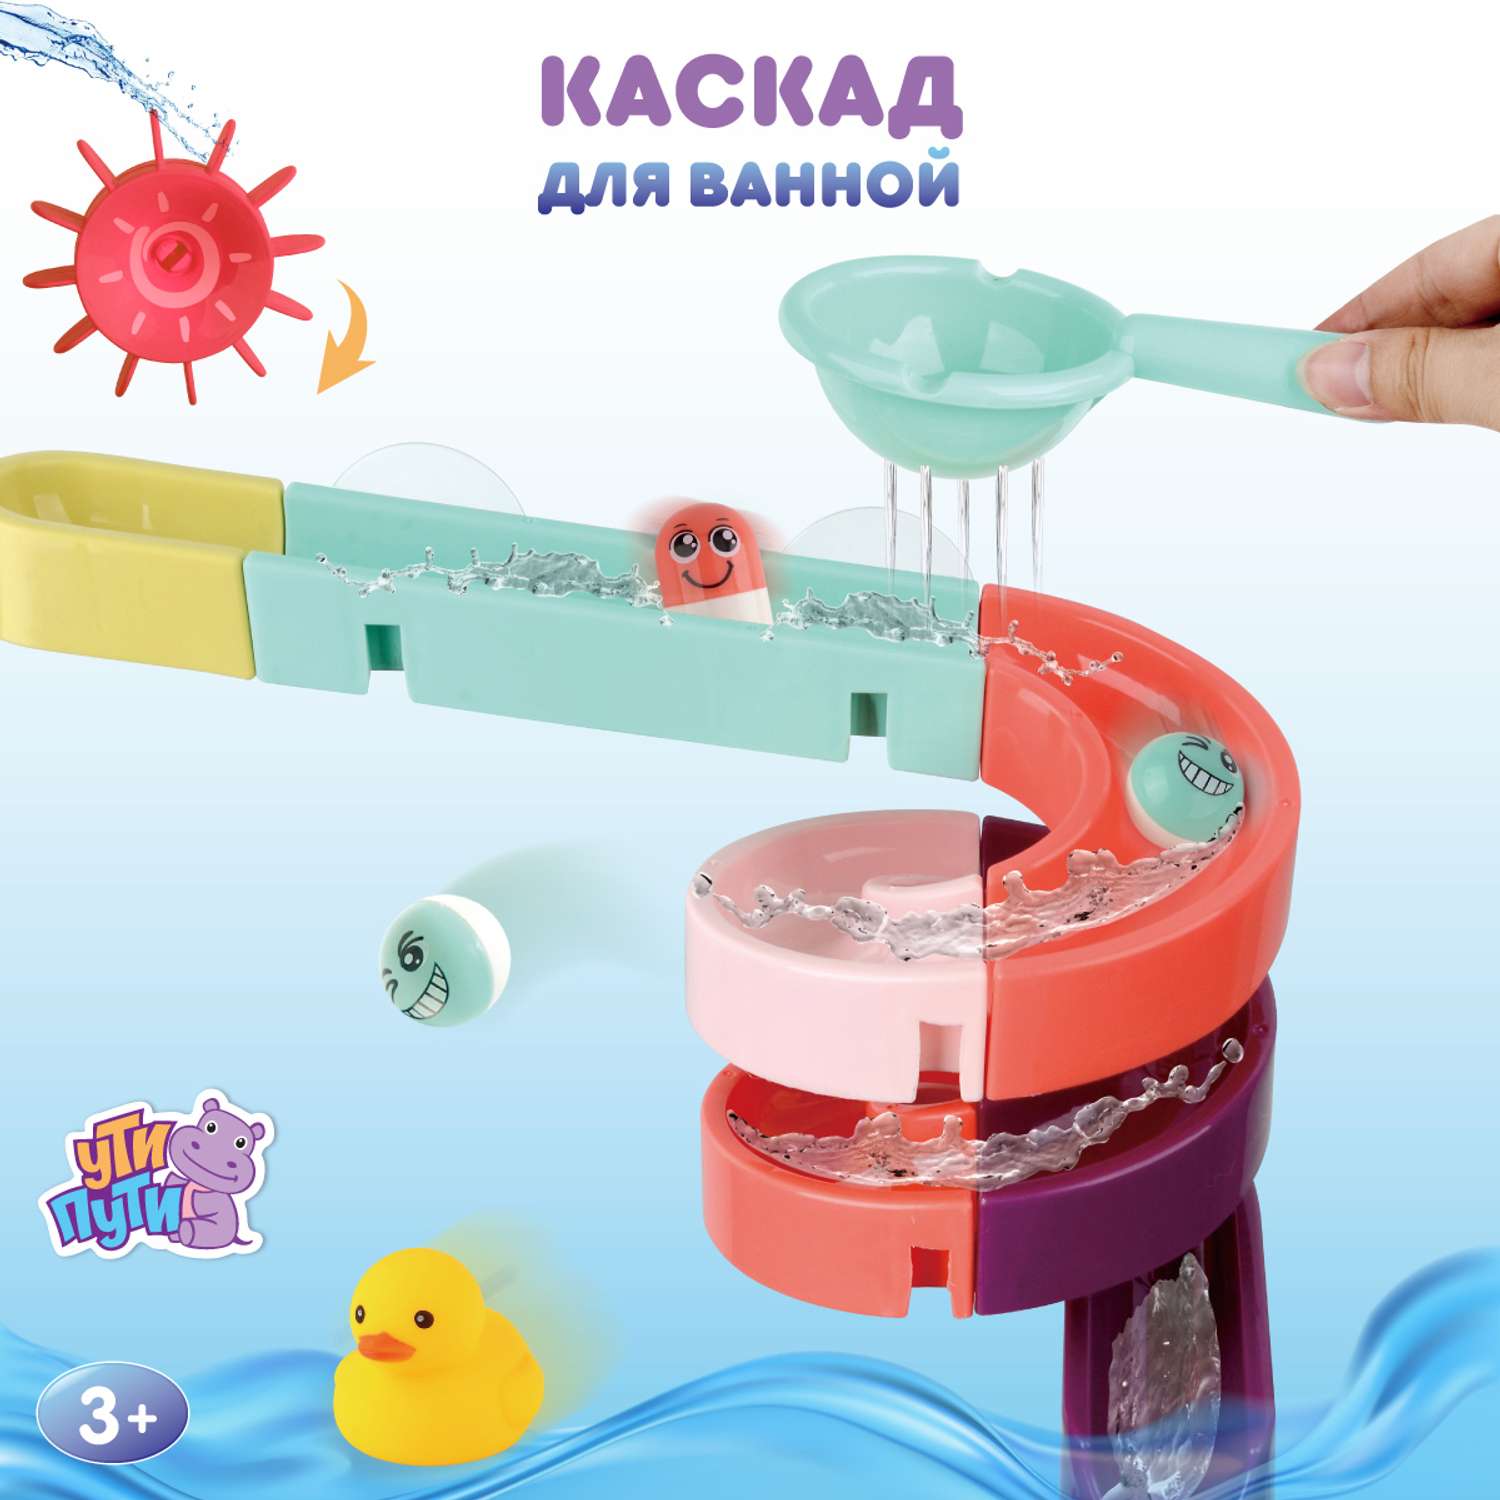 Игрушка для ванны Ути Пути Каскад - фото 9